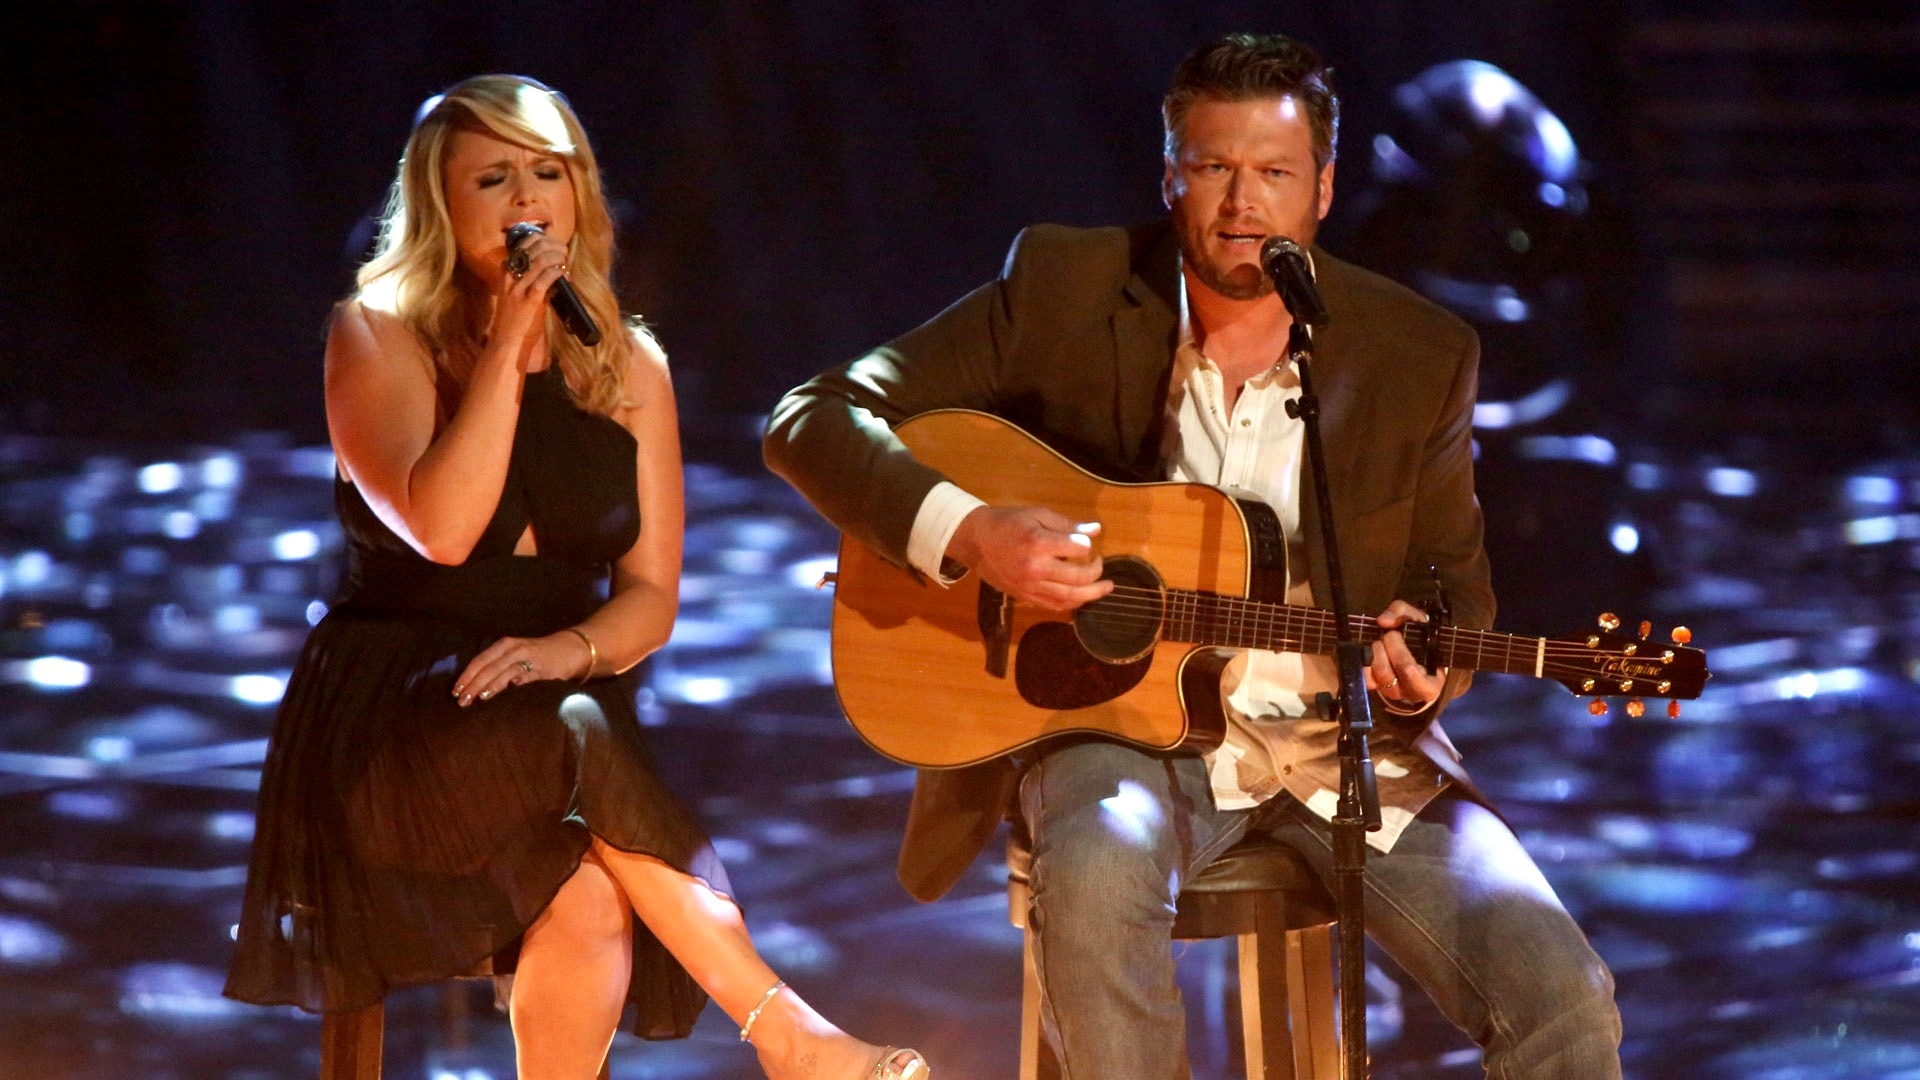 Watch The Voice Highlight: Blake Shelton and Miranda Lambert: "Over You